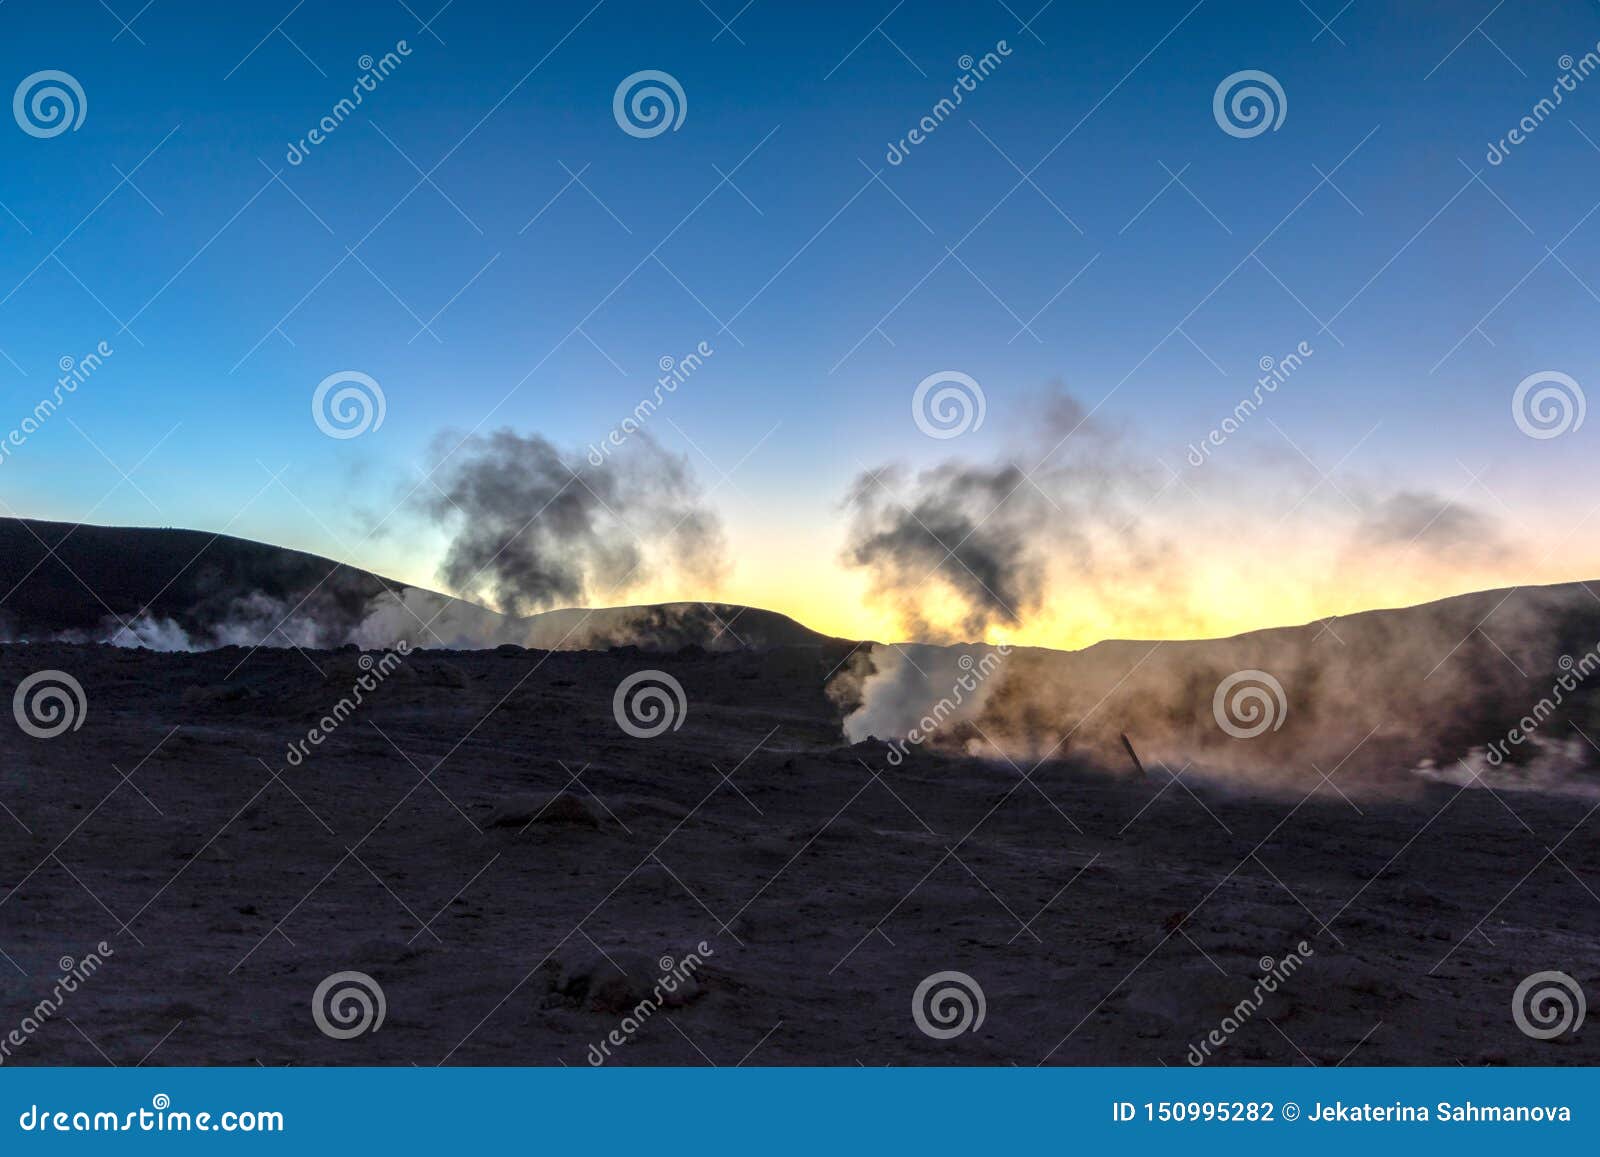 the sol de la manana, rising sun steaming geyser field high up in a massive crater in bolivian altiplano, bolivia